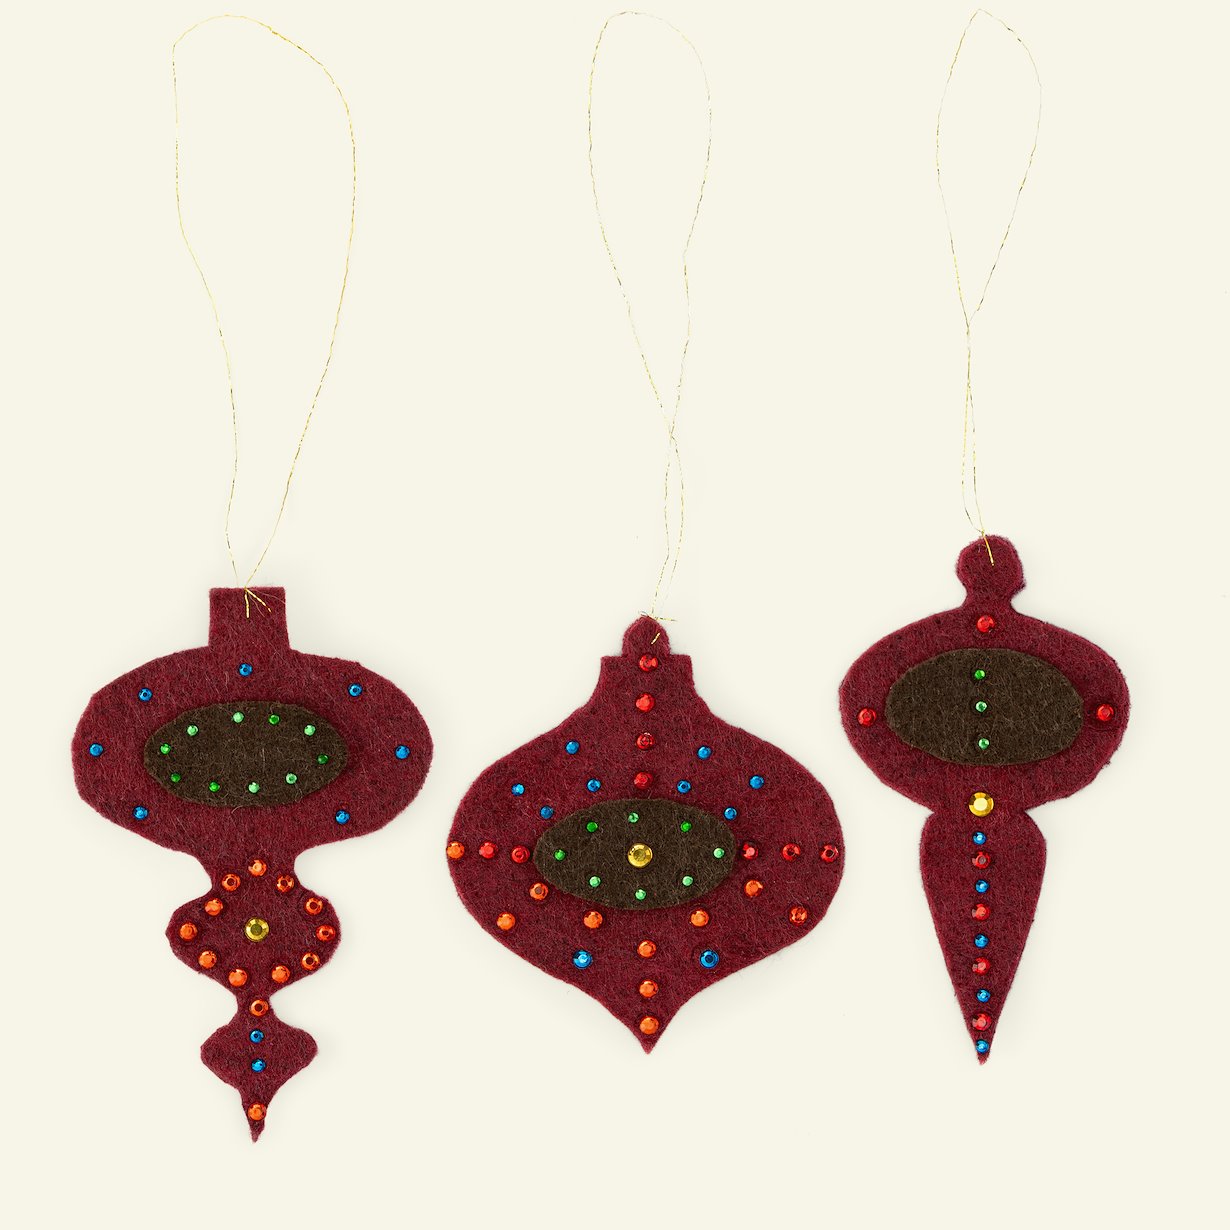 DecoArt SoSoft Fabric Paint 1 oz. - Christmas Red ⋆ Gina Reddin Designs